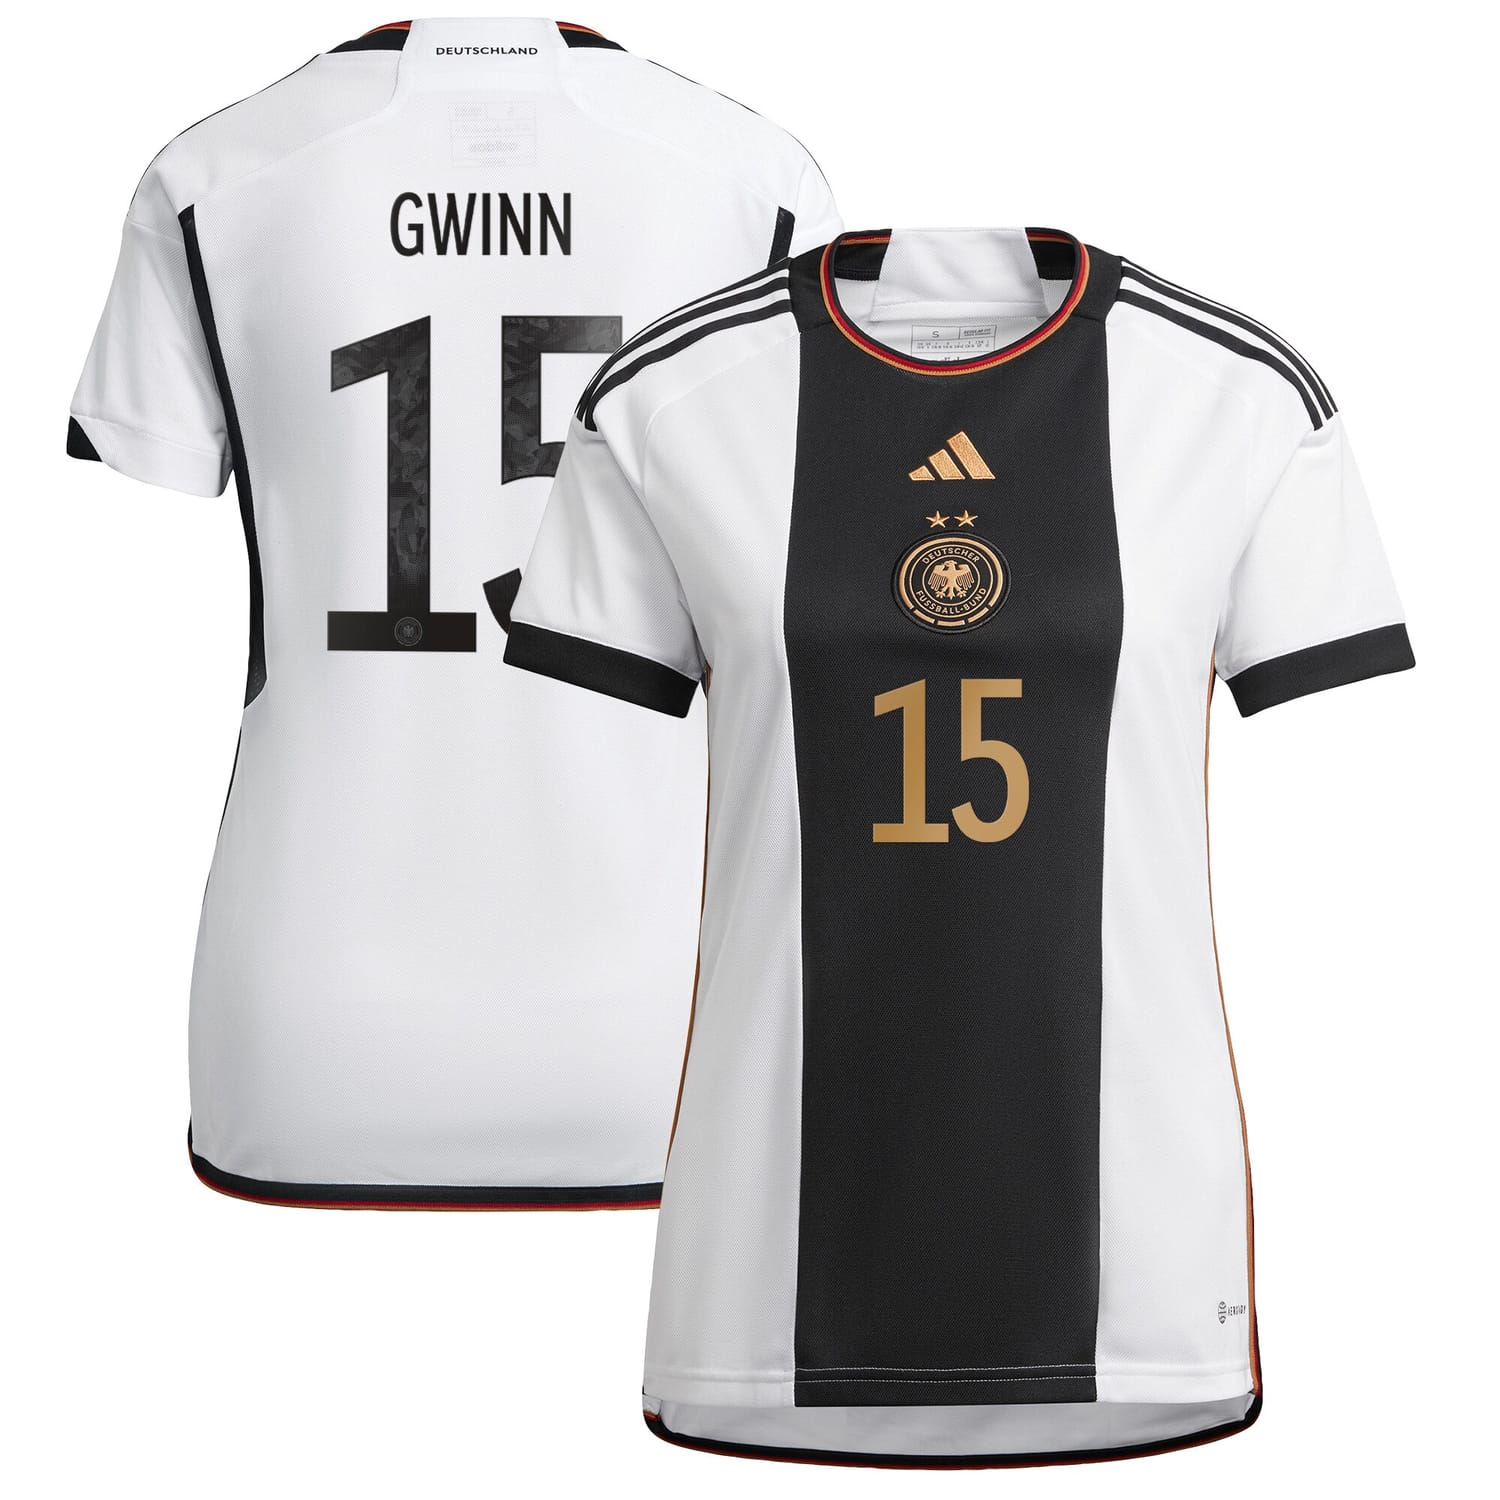 Germany National Team Home Jersey Shirt player Gwinn 15 printing for Women